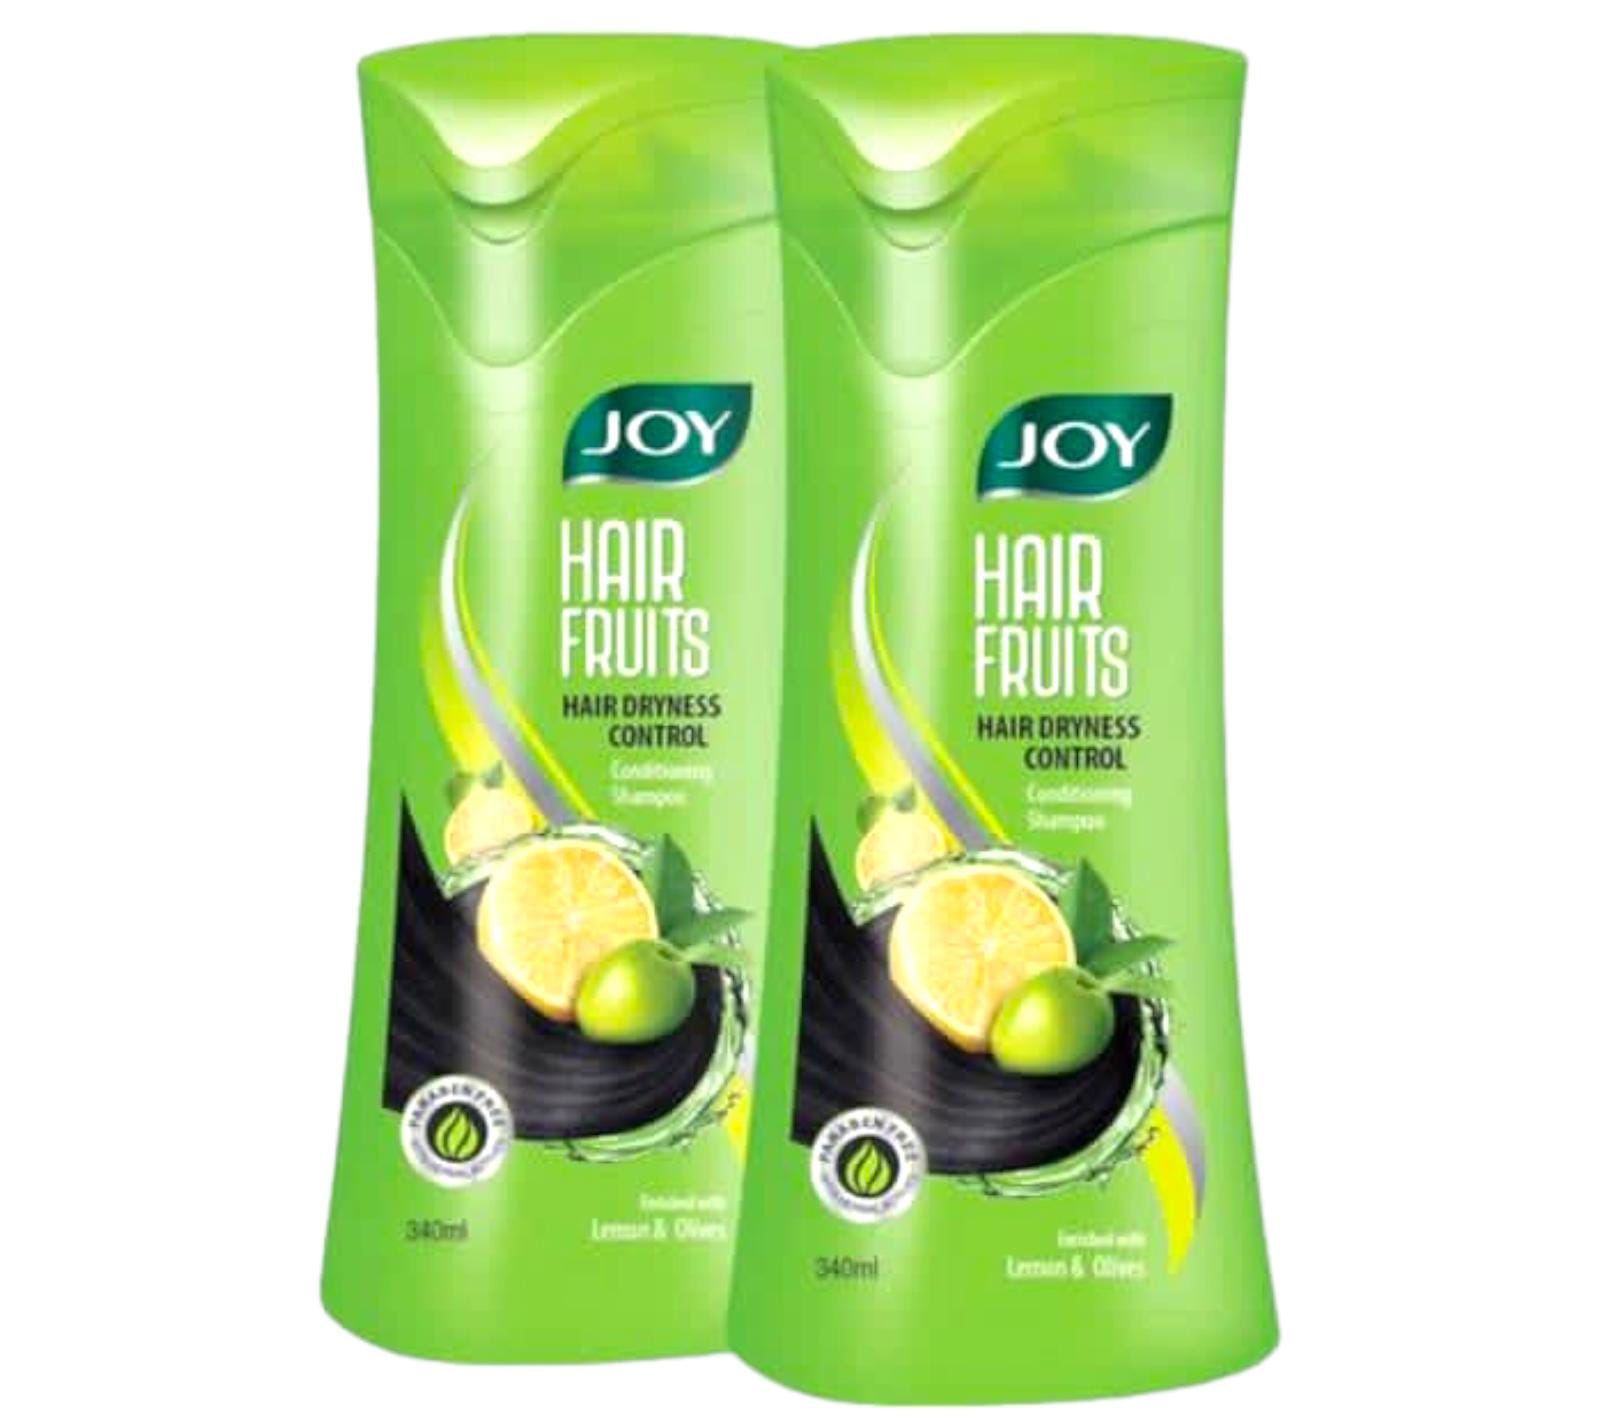 Joy Hair Fruits Hair Dryness Control Conditioning Shampoo 